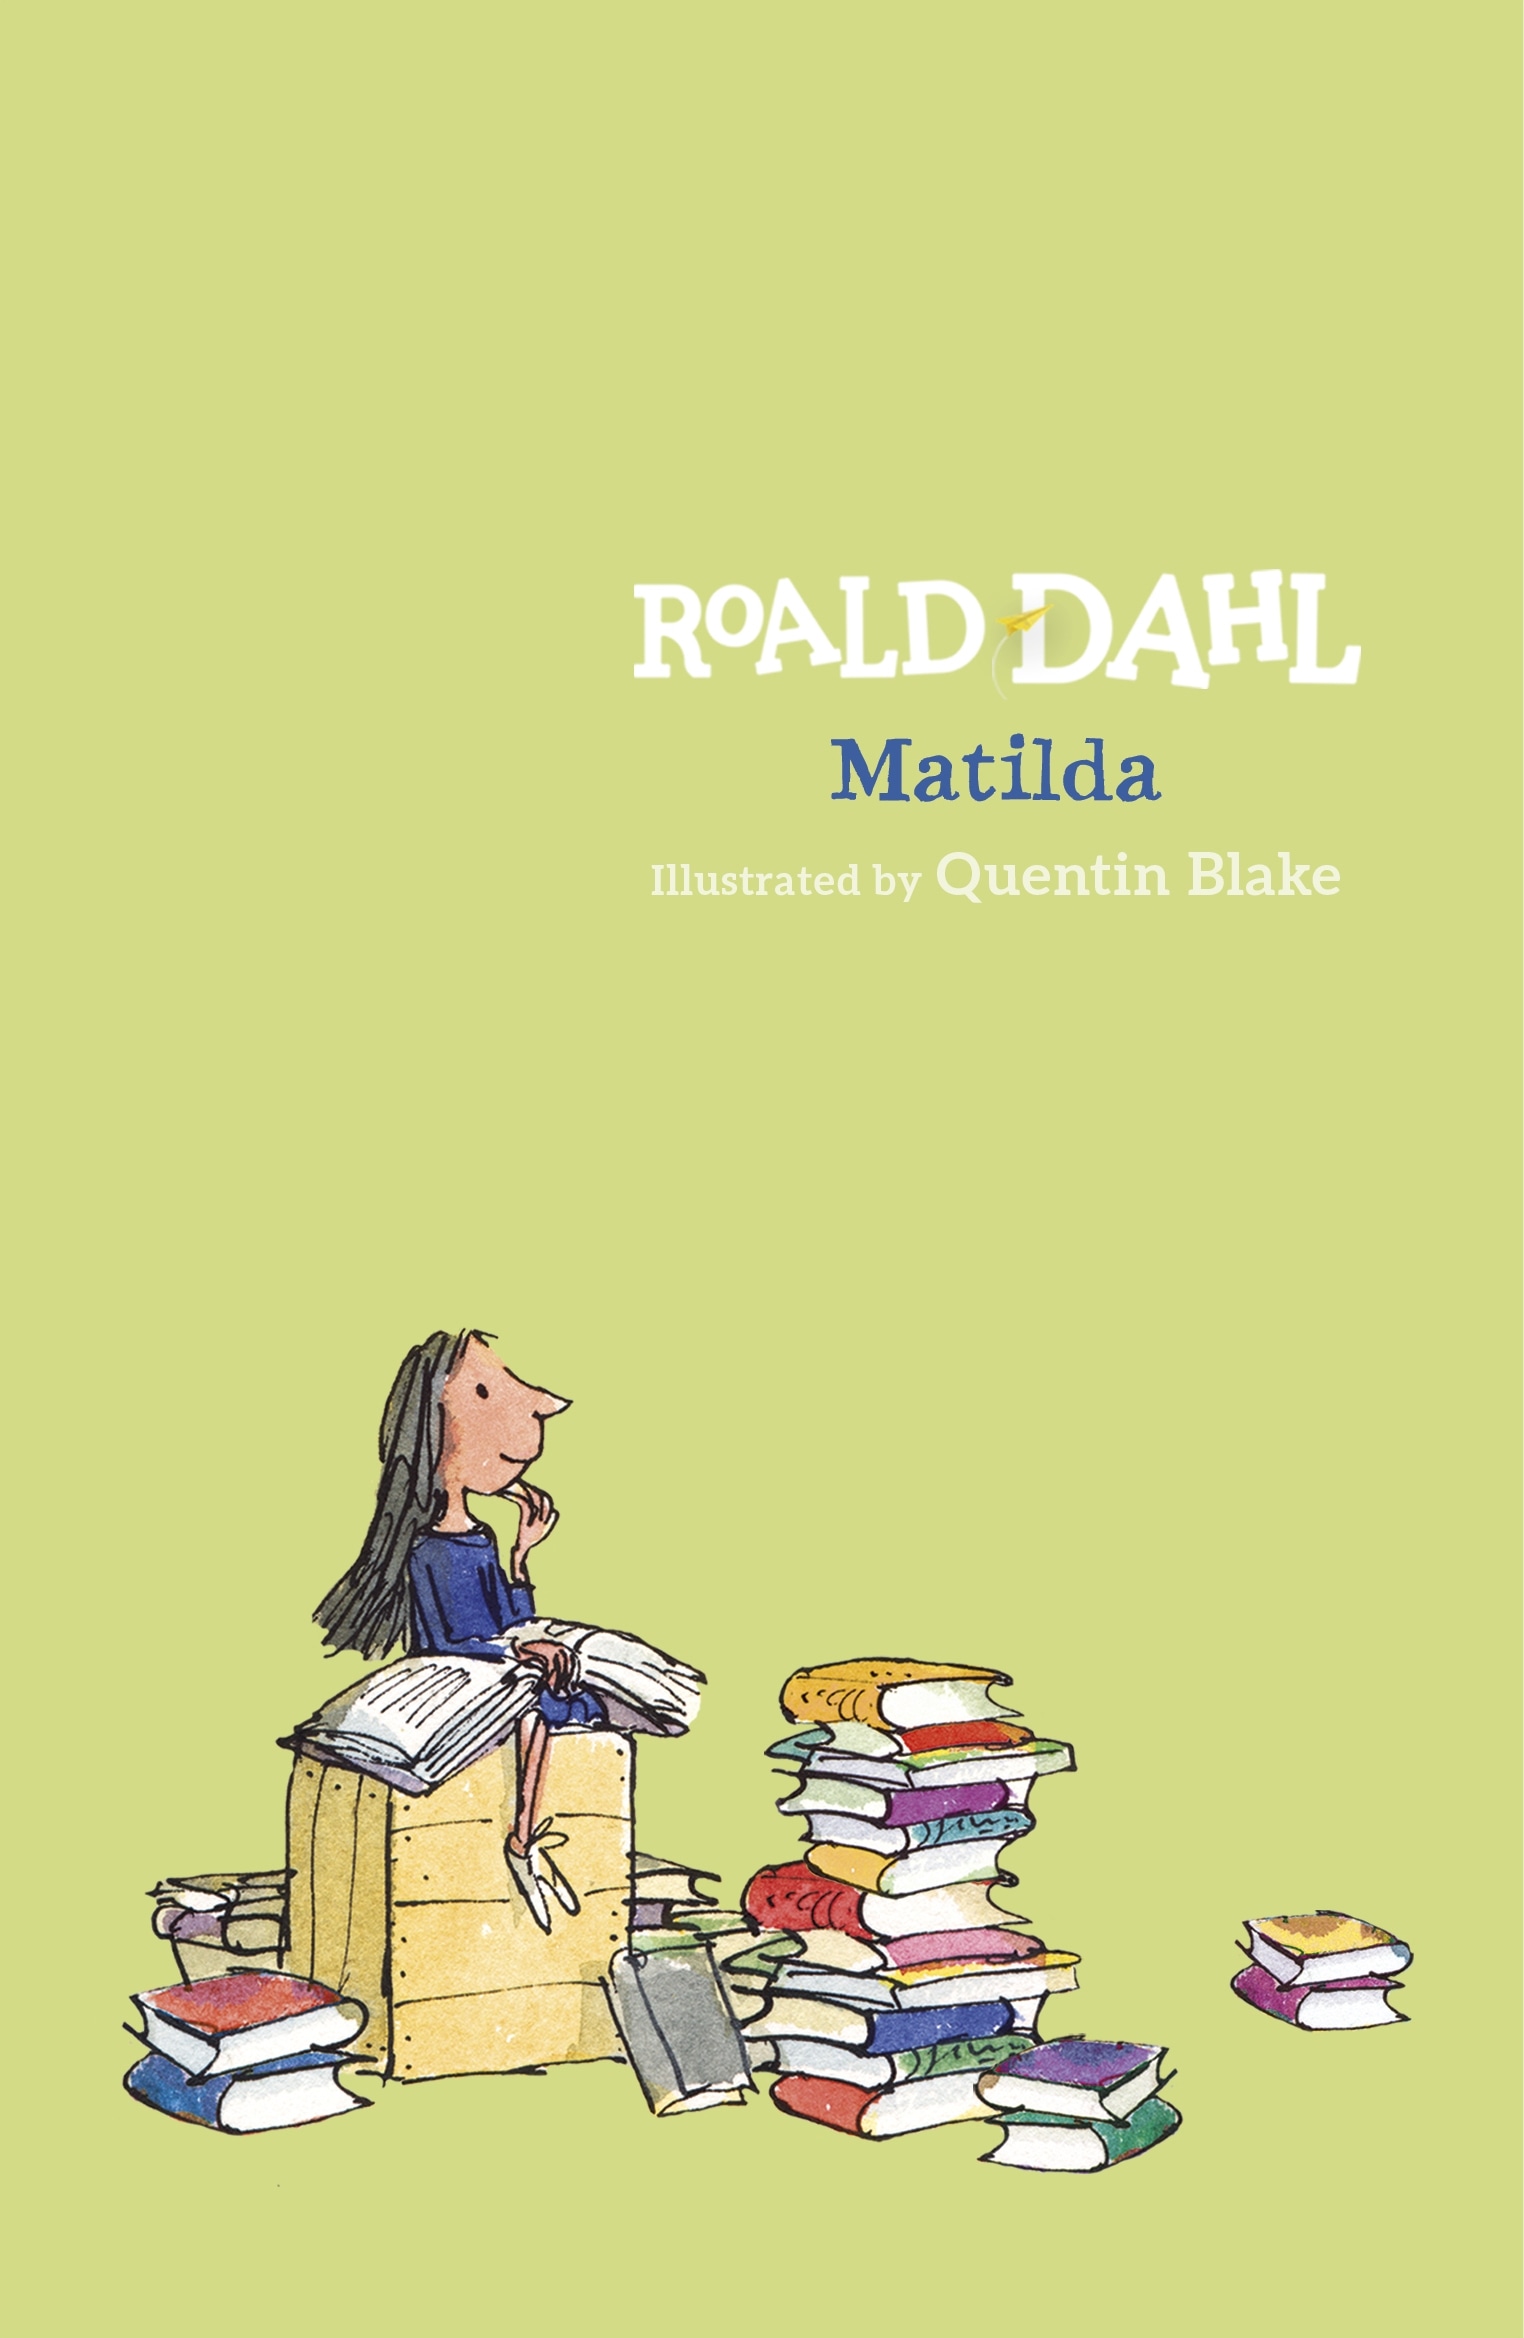 Matilda dahl. Dahl Roald "Matilda".